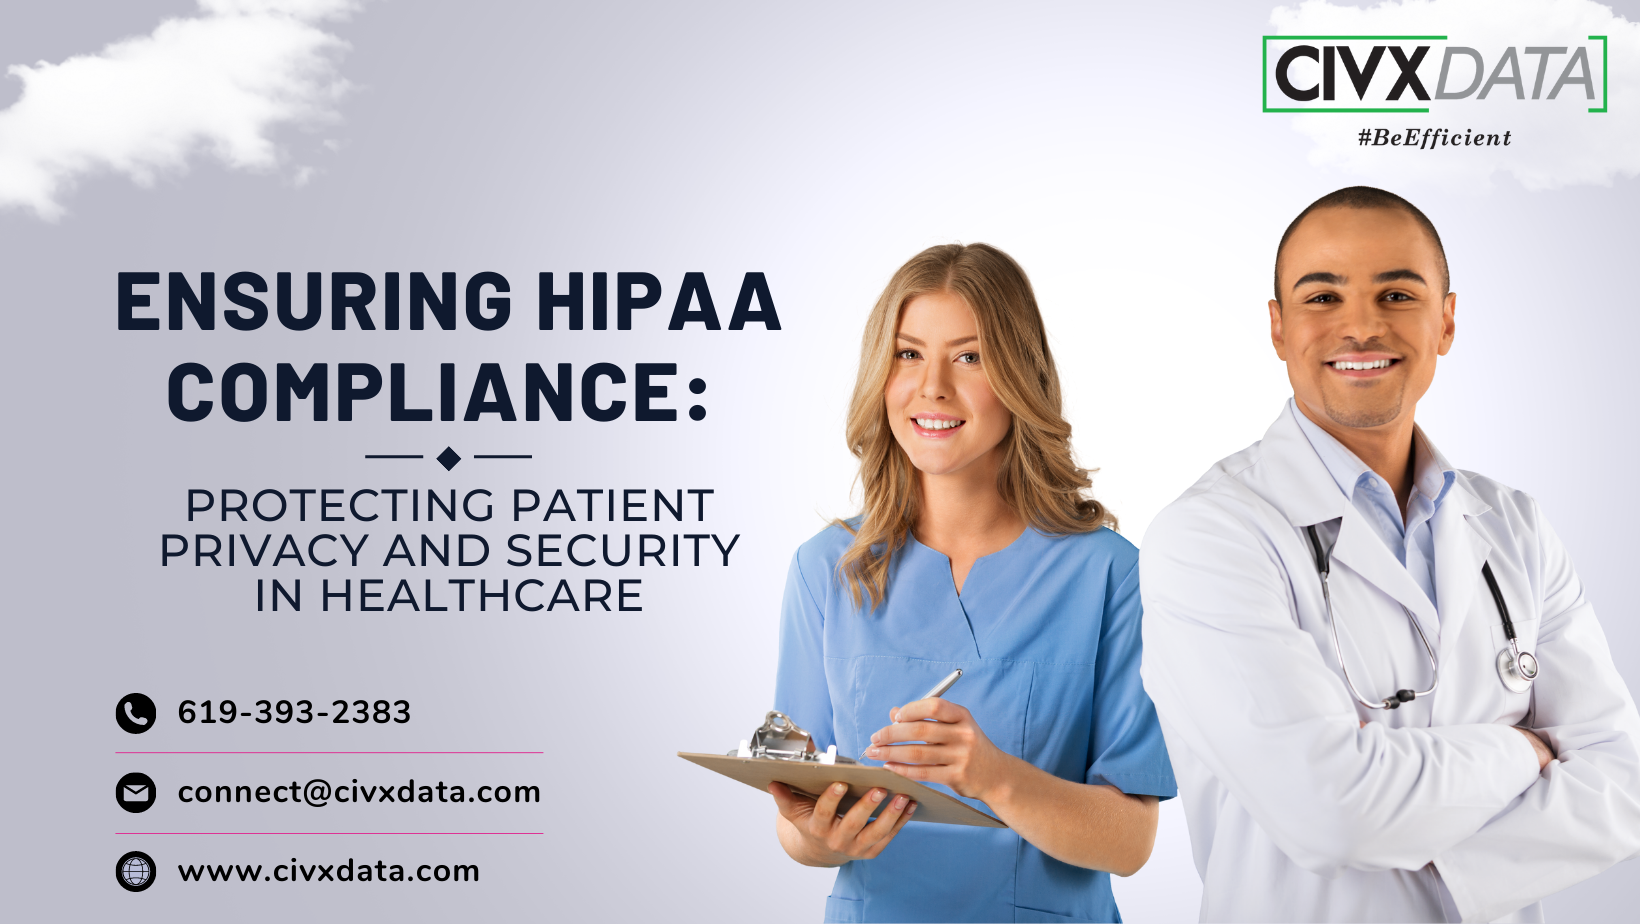 HIPAA Compliance CIVXDATA